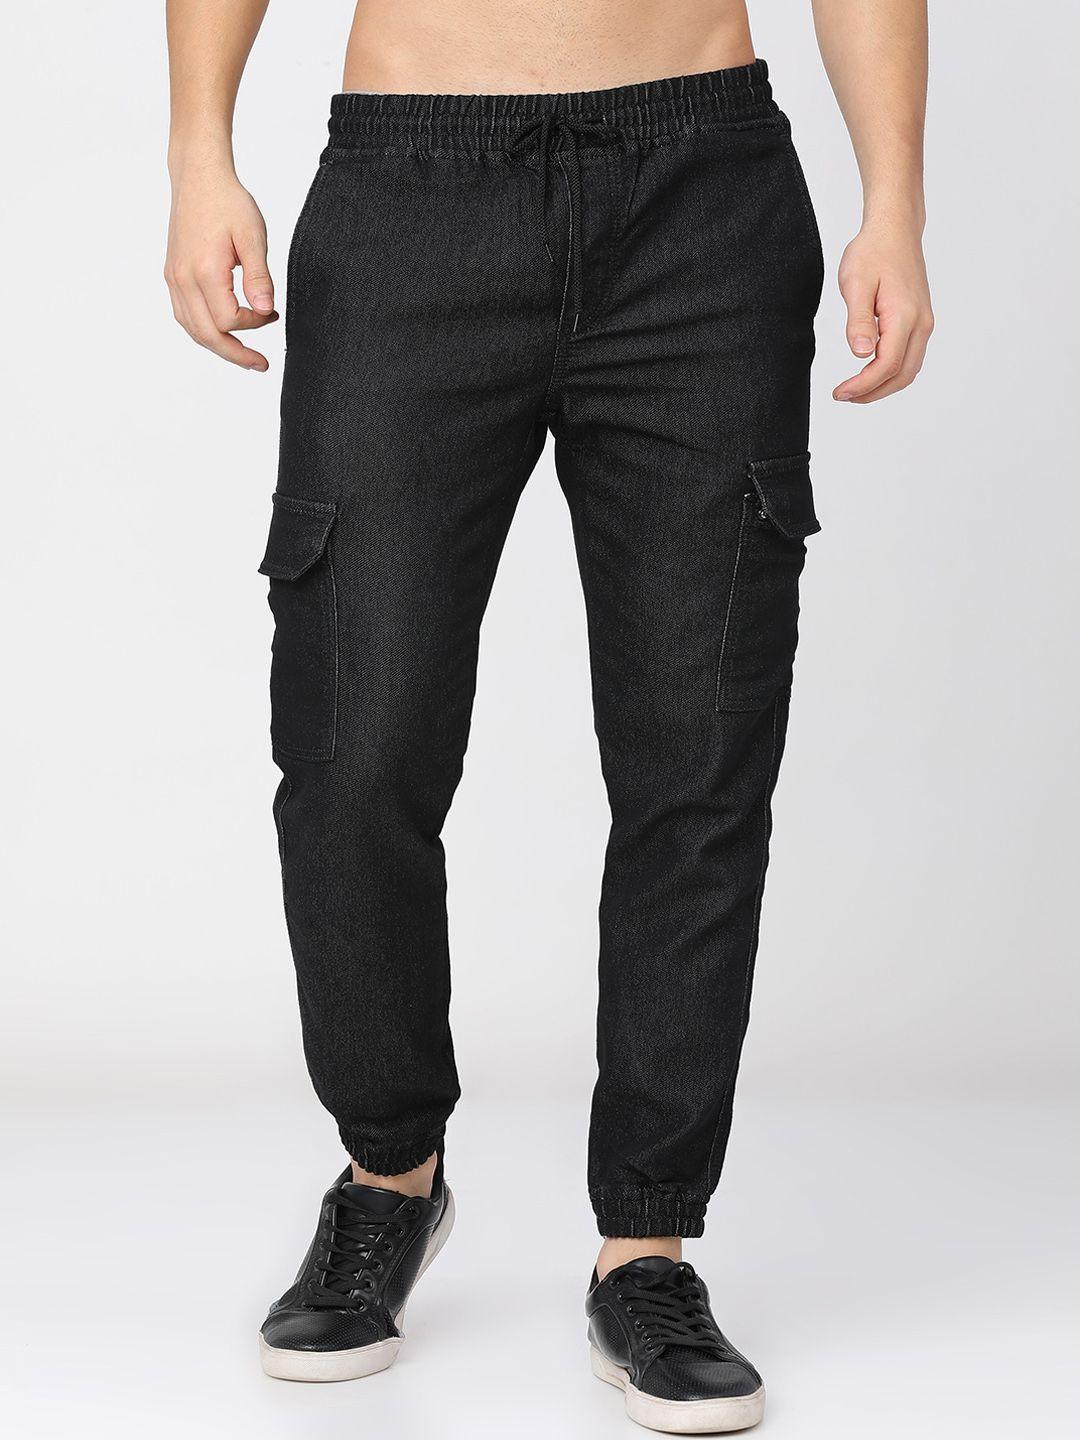 ketch-men-black-jogger-stretchable-jeans